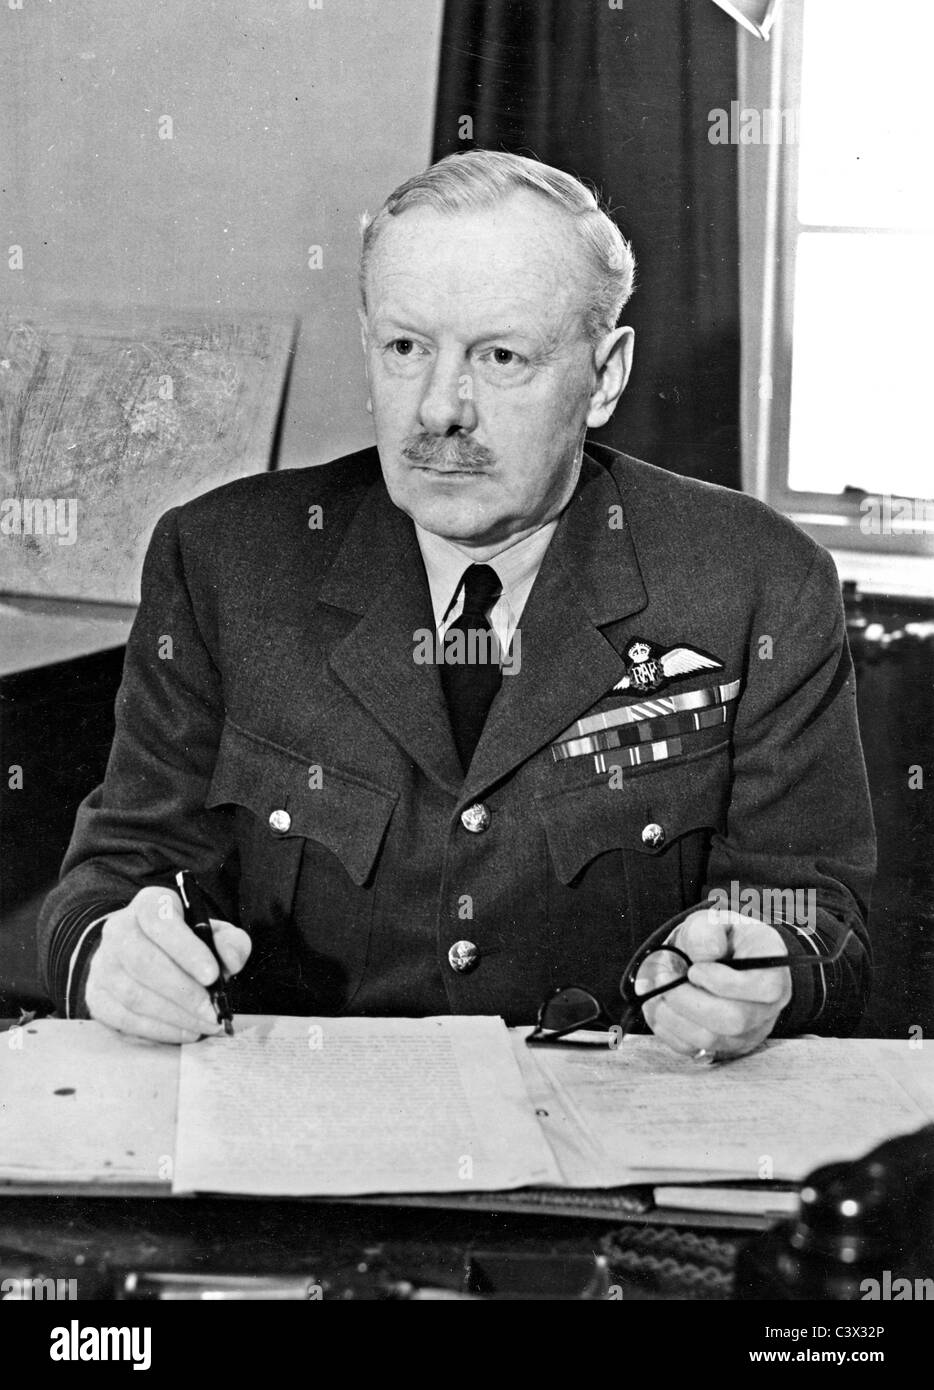 SIR ARTHUR HARRIS (1892-1984) as Air Officer Commanding RAF Bomber Command in April 1944 at Bomber Command, High Wycombe Stock Photo